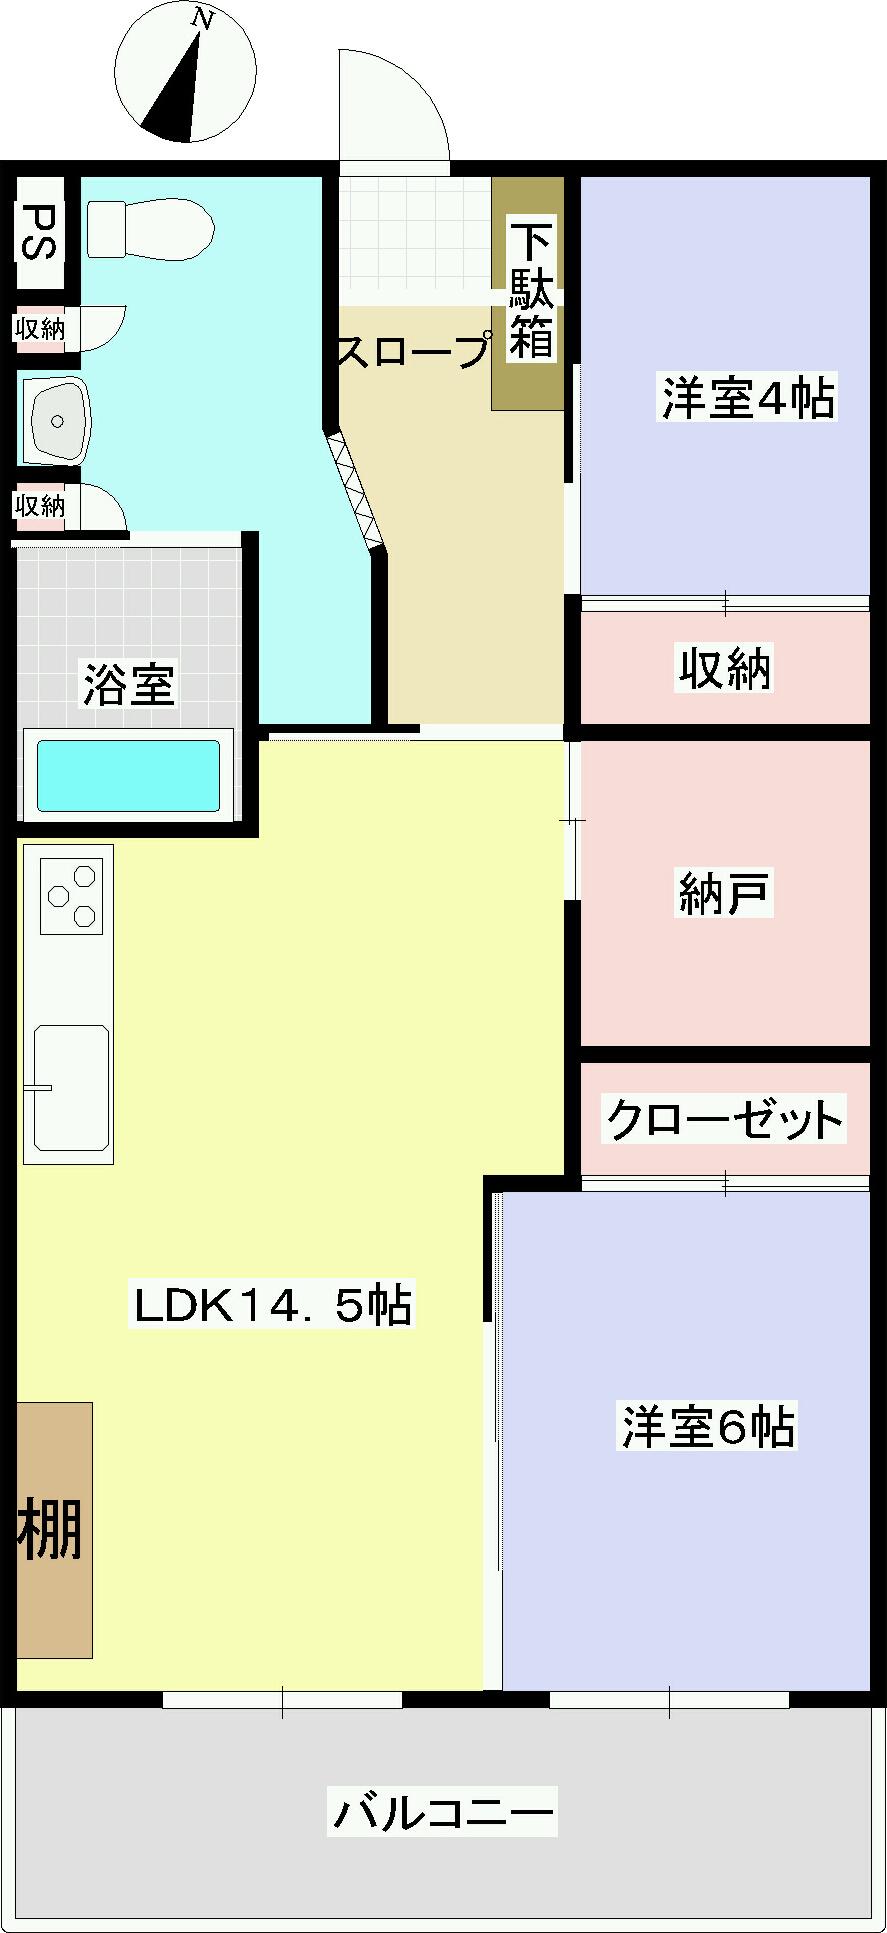 Floor plan. 2LDK + S (storeroom), Price 9 million yen, Occupied area 58.19 sq m , Balcony area 8.12 sq m